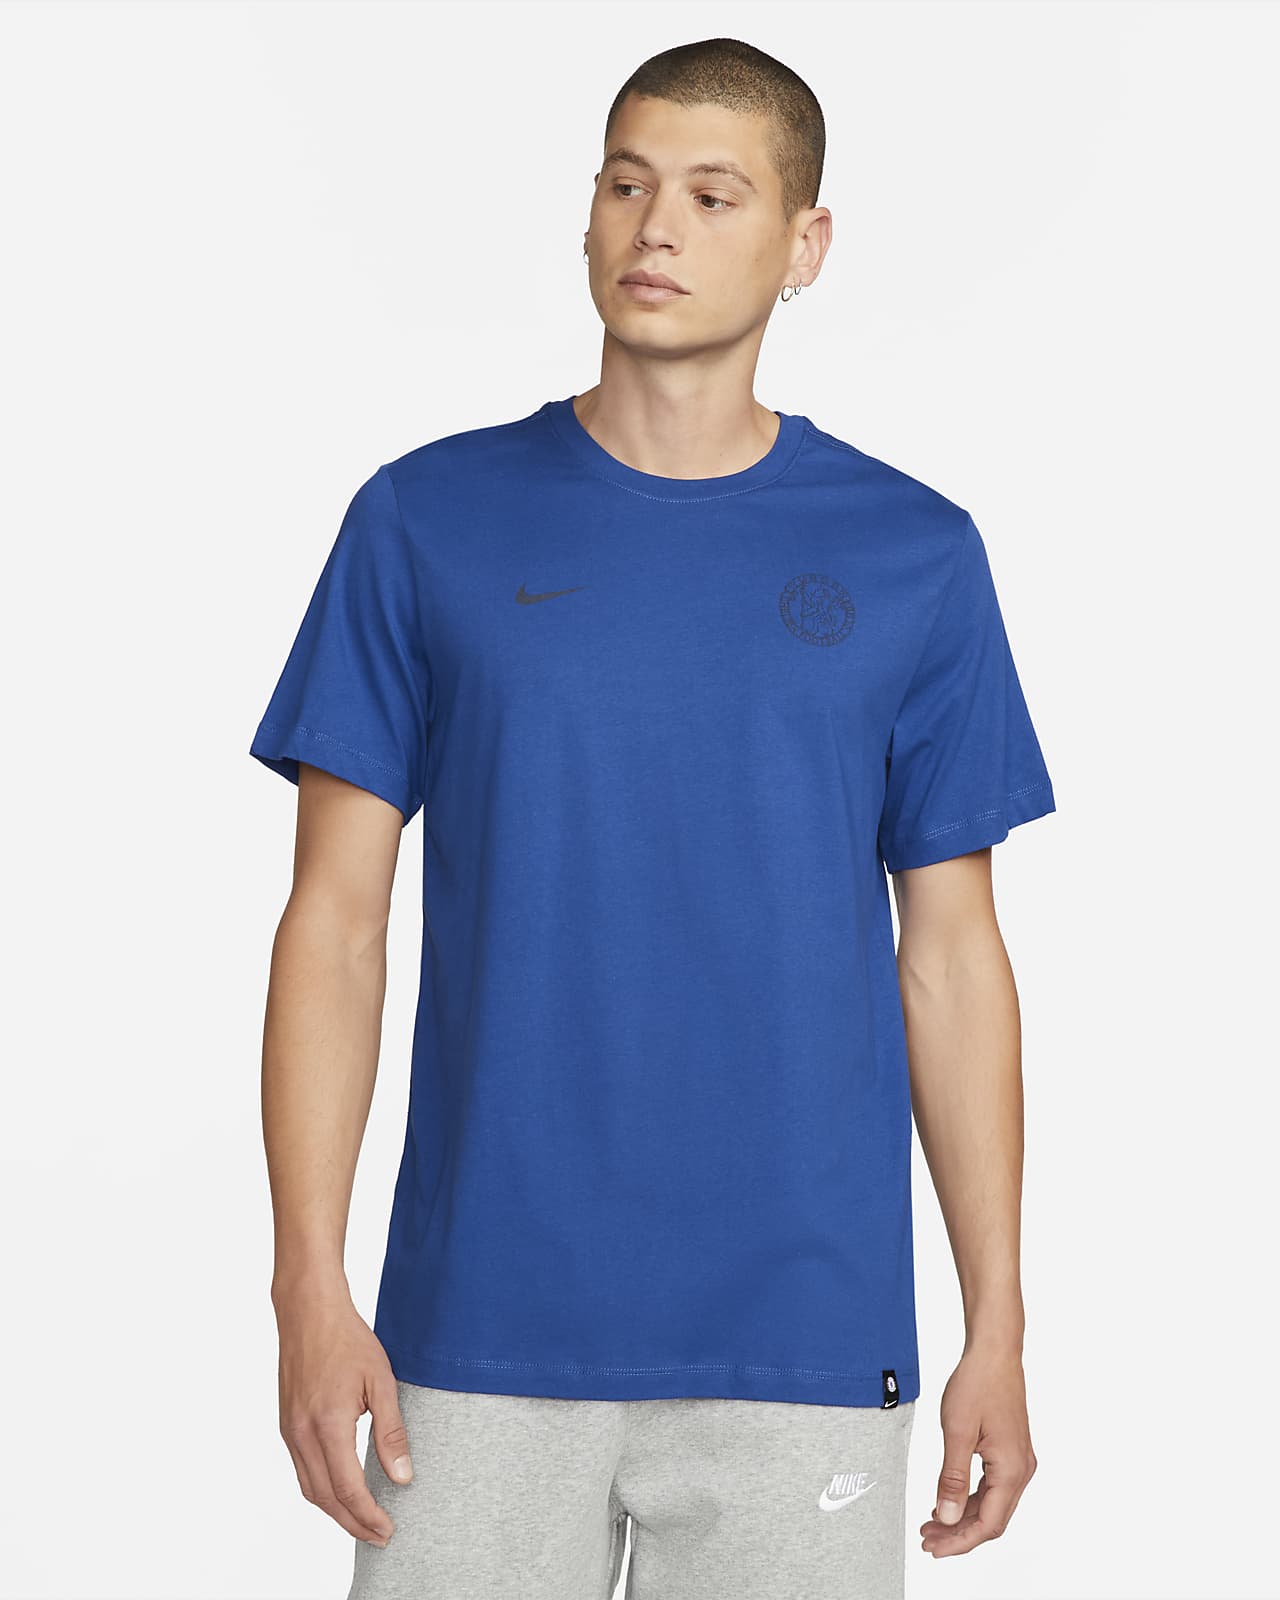 Chelsea FC Voice Men's Soccer T-Shirt